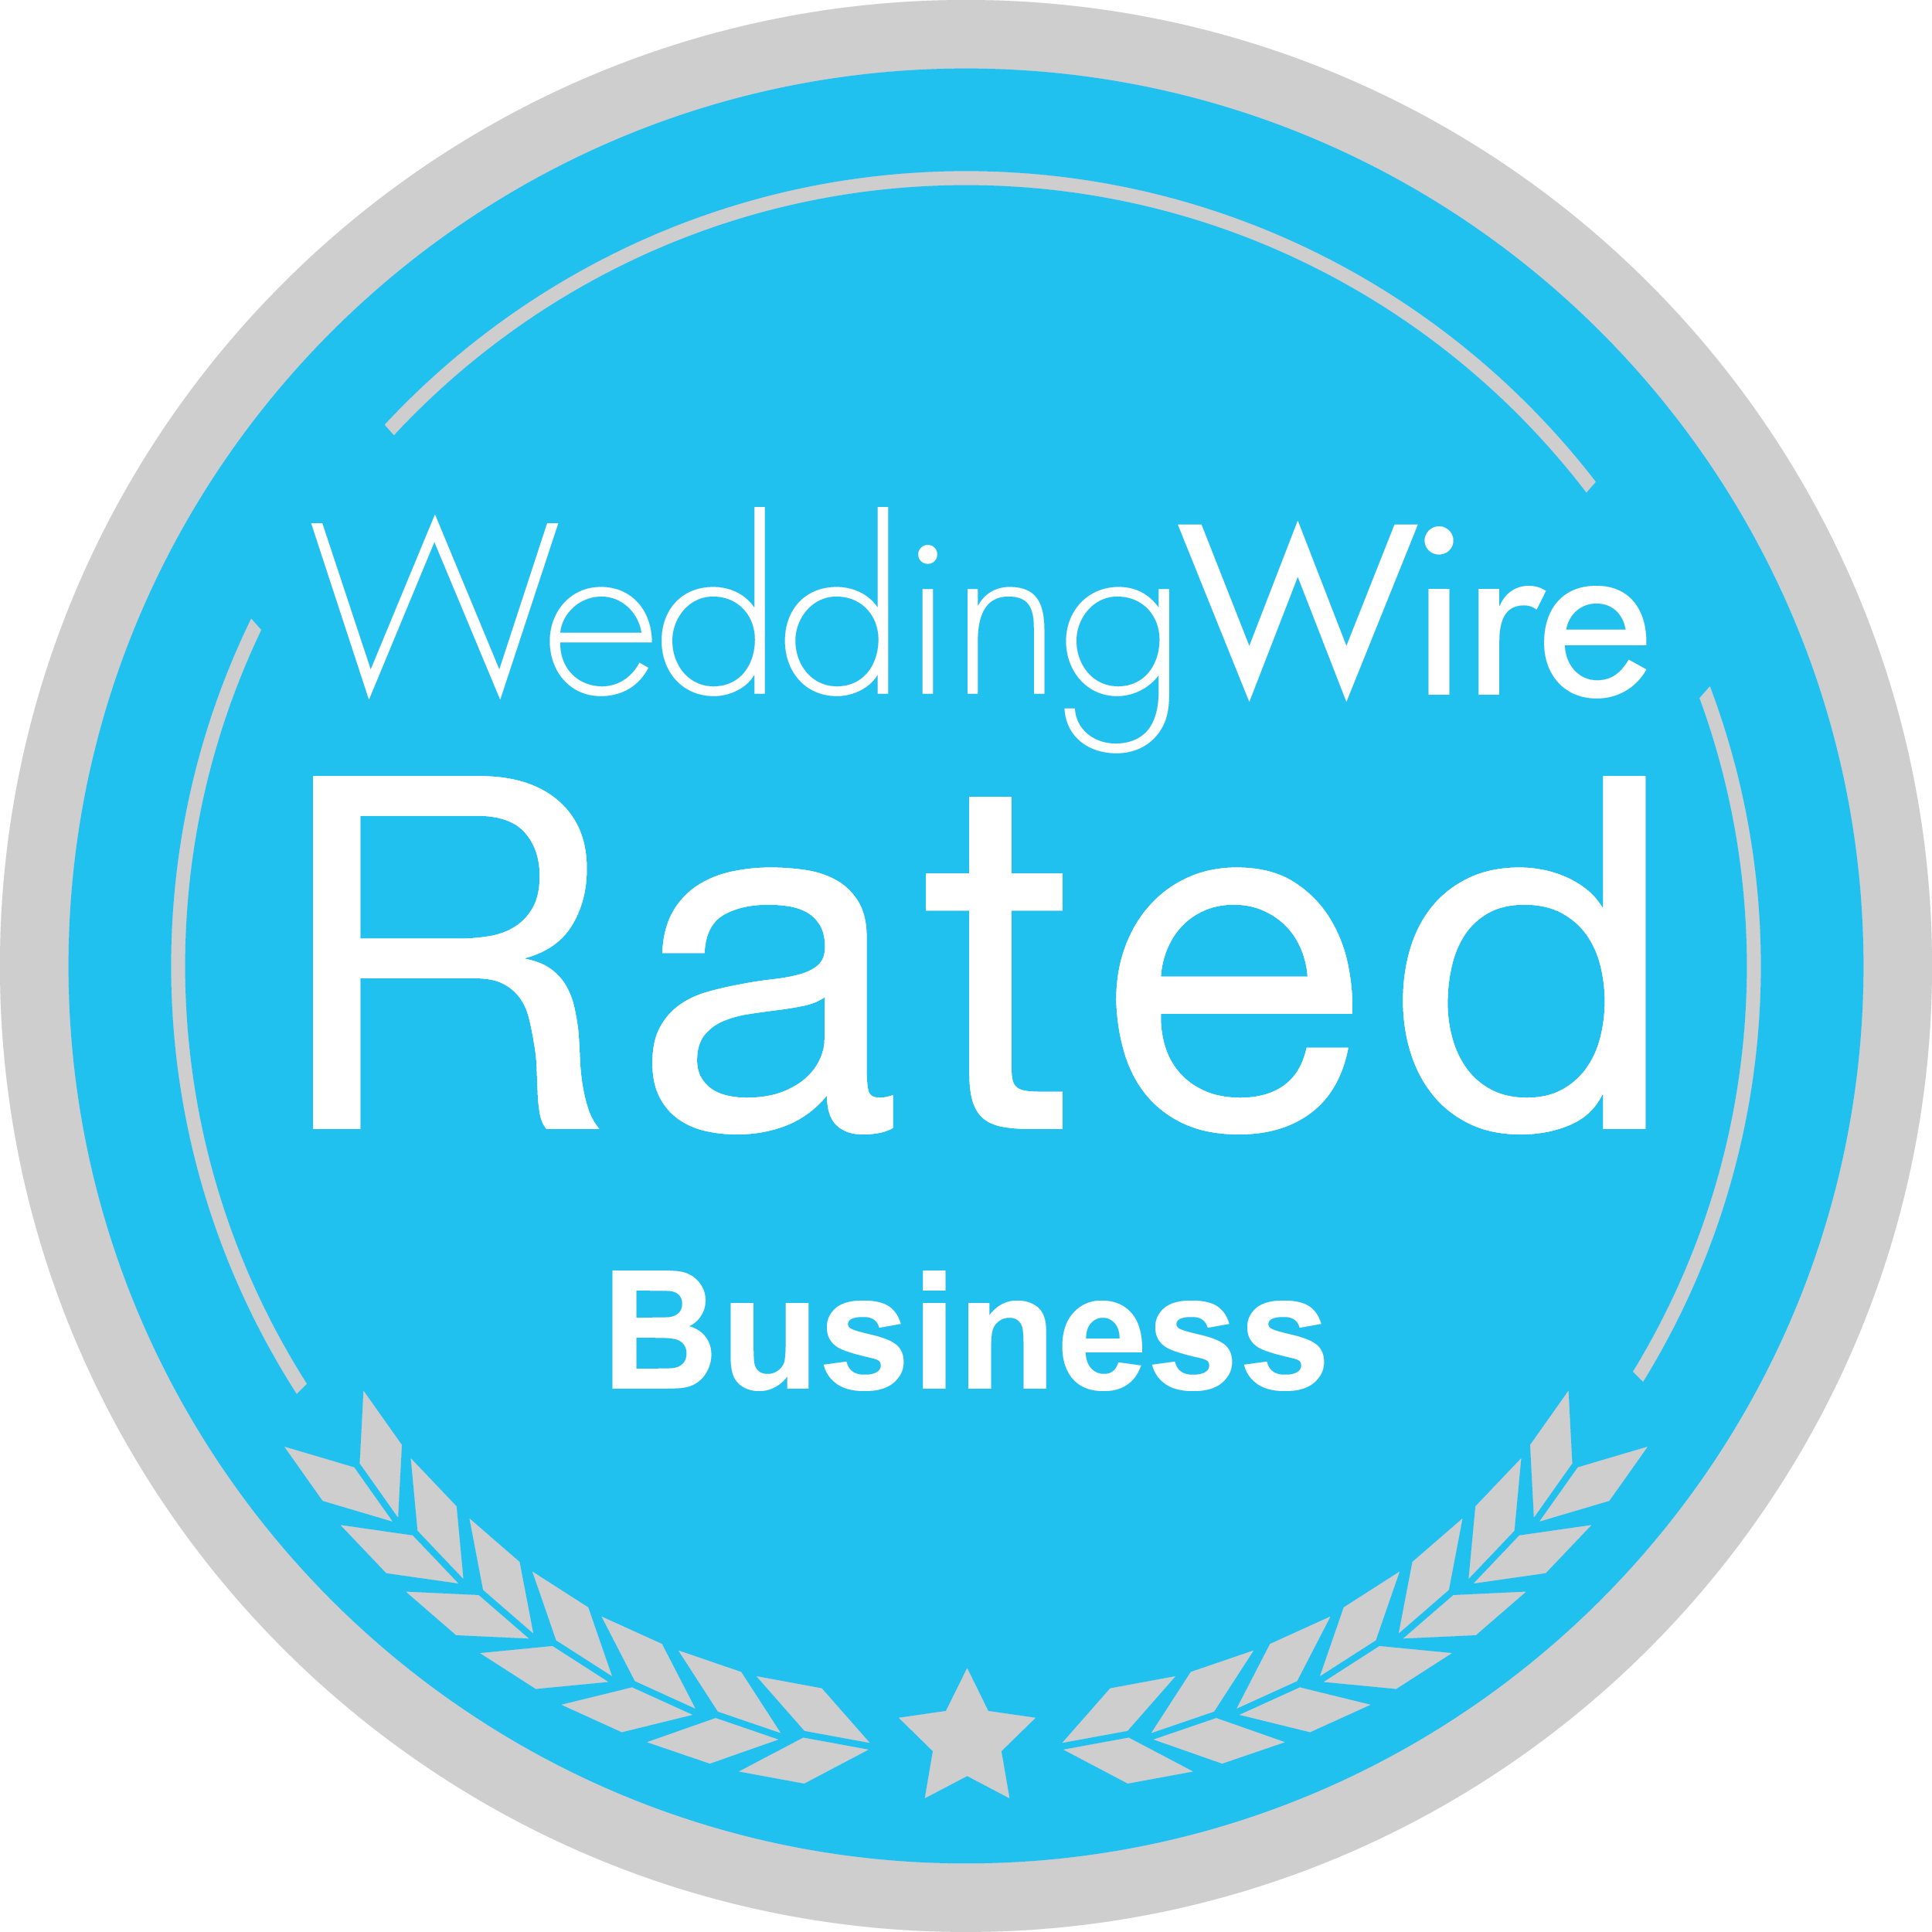 DjMonuEntertainment wedding wire business